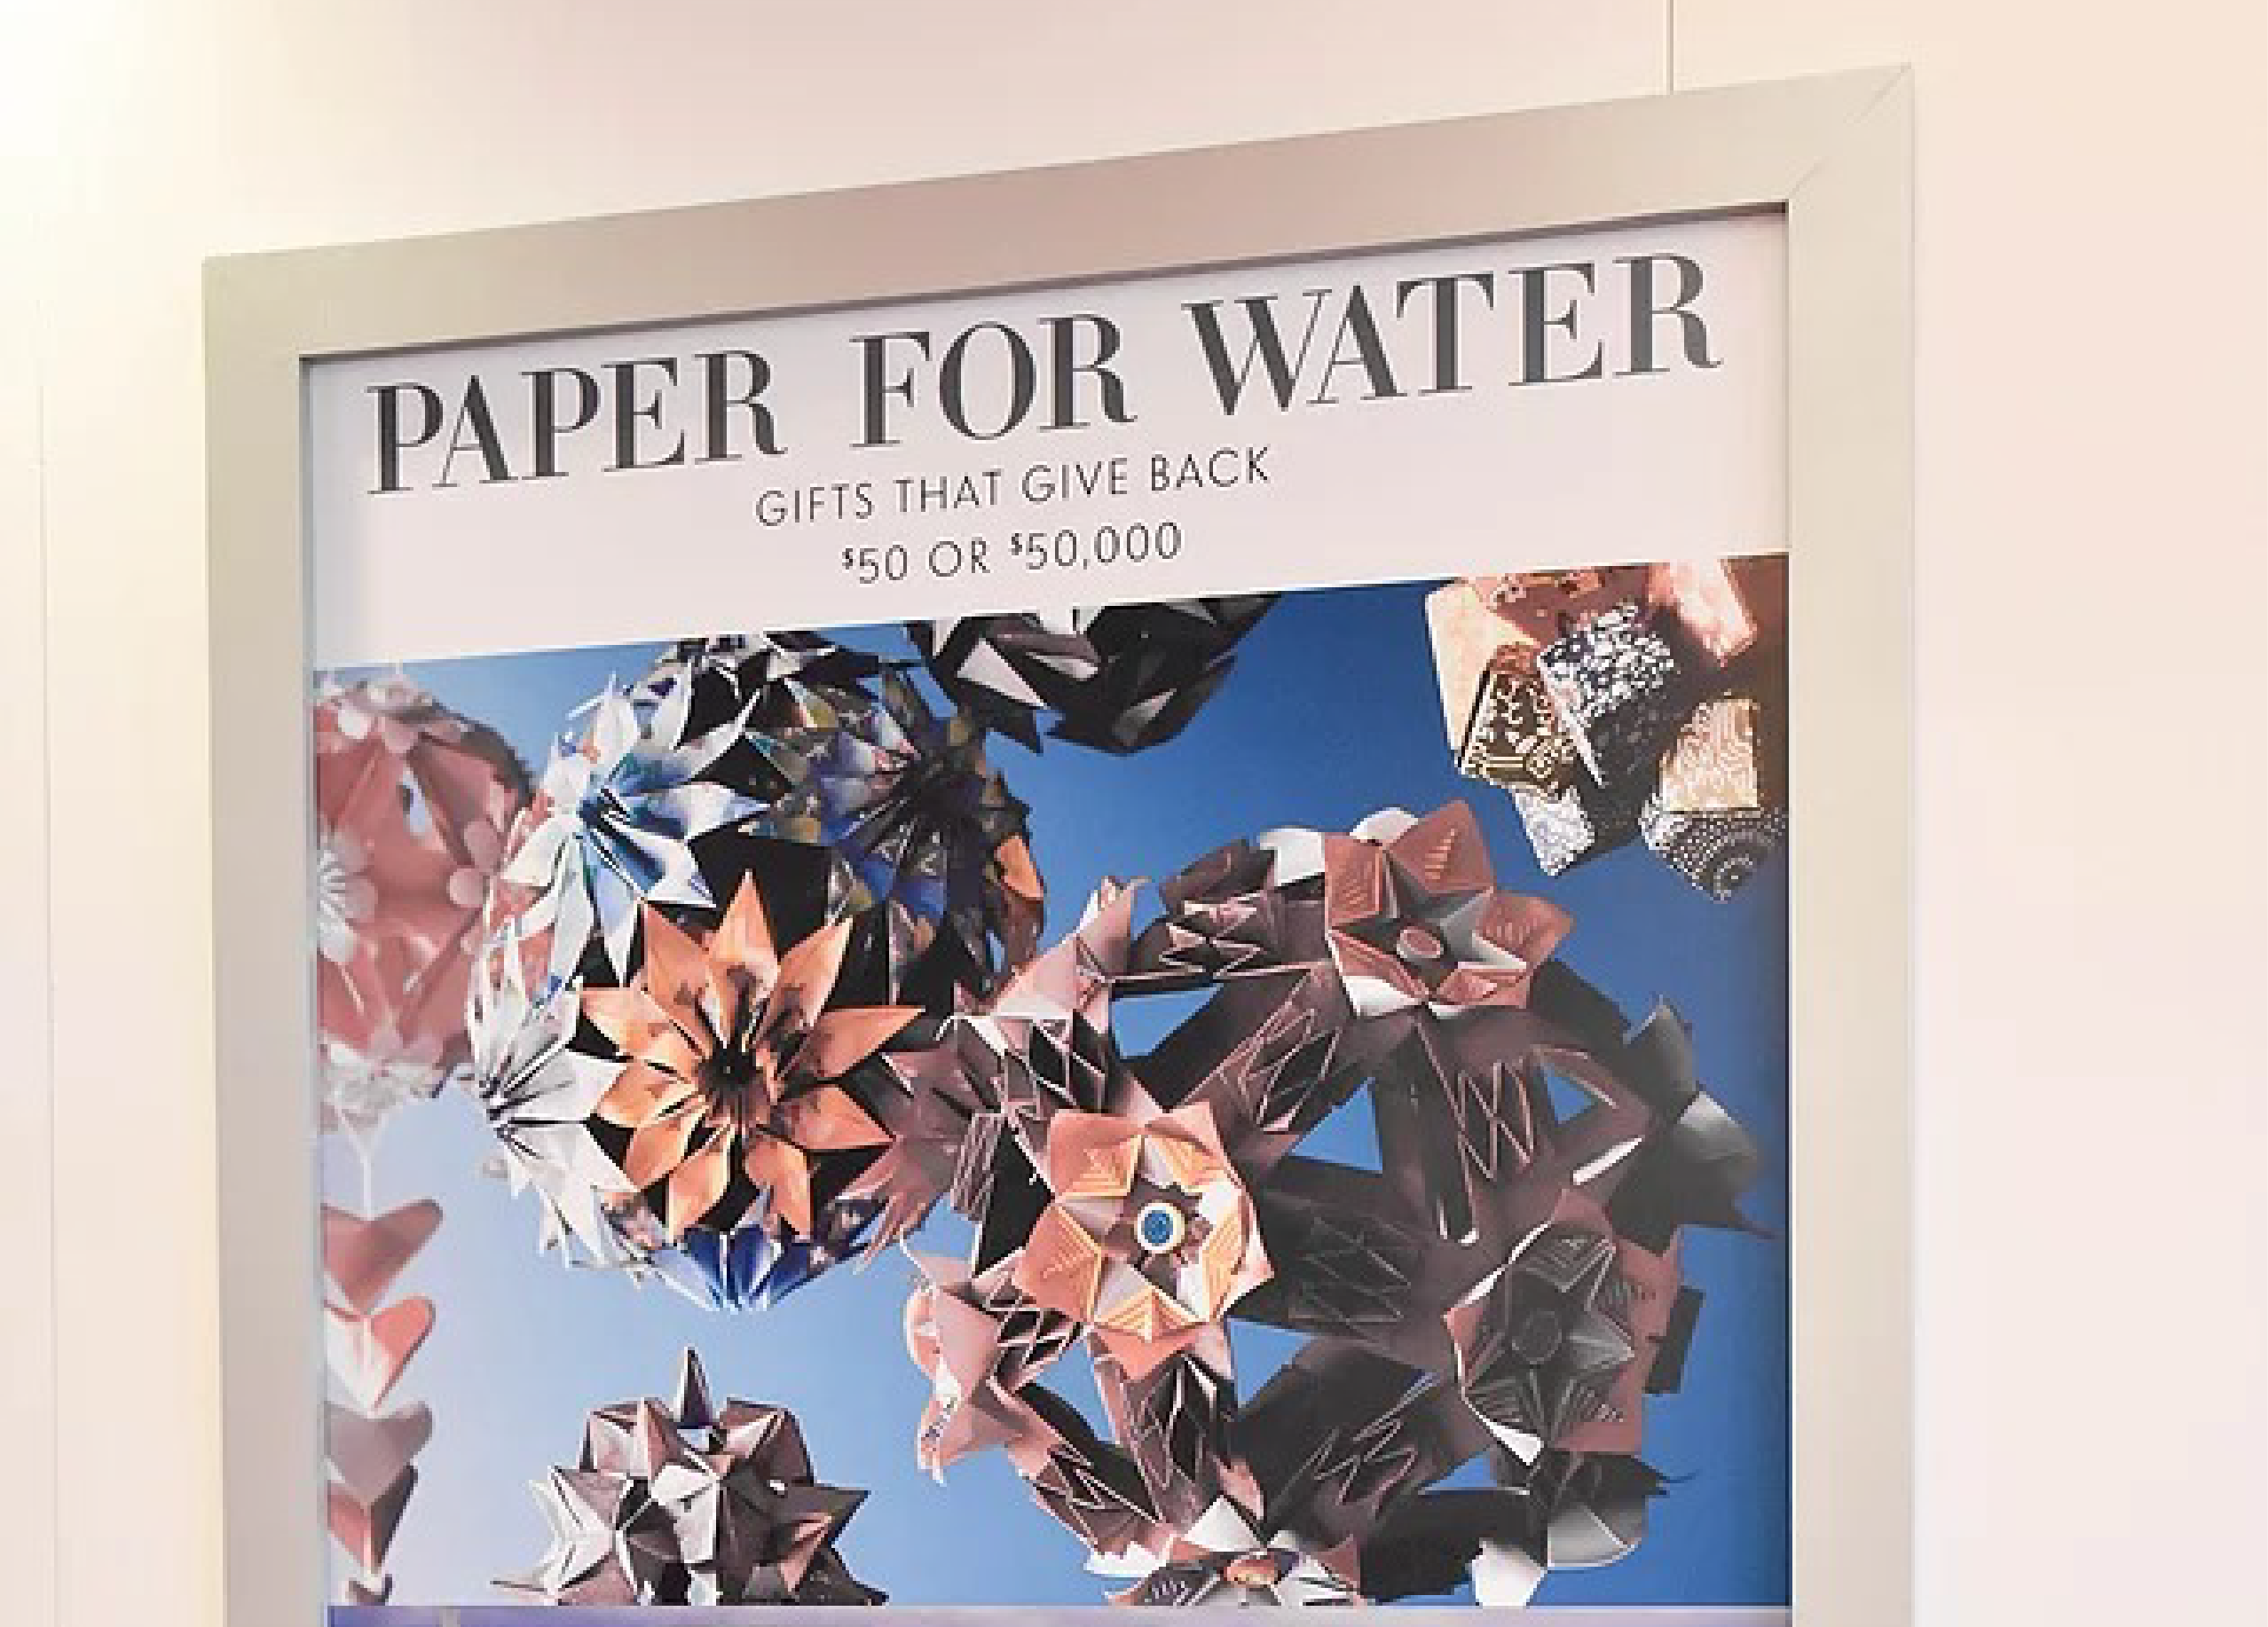 Paper for water neiman marcus 2